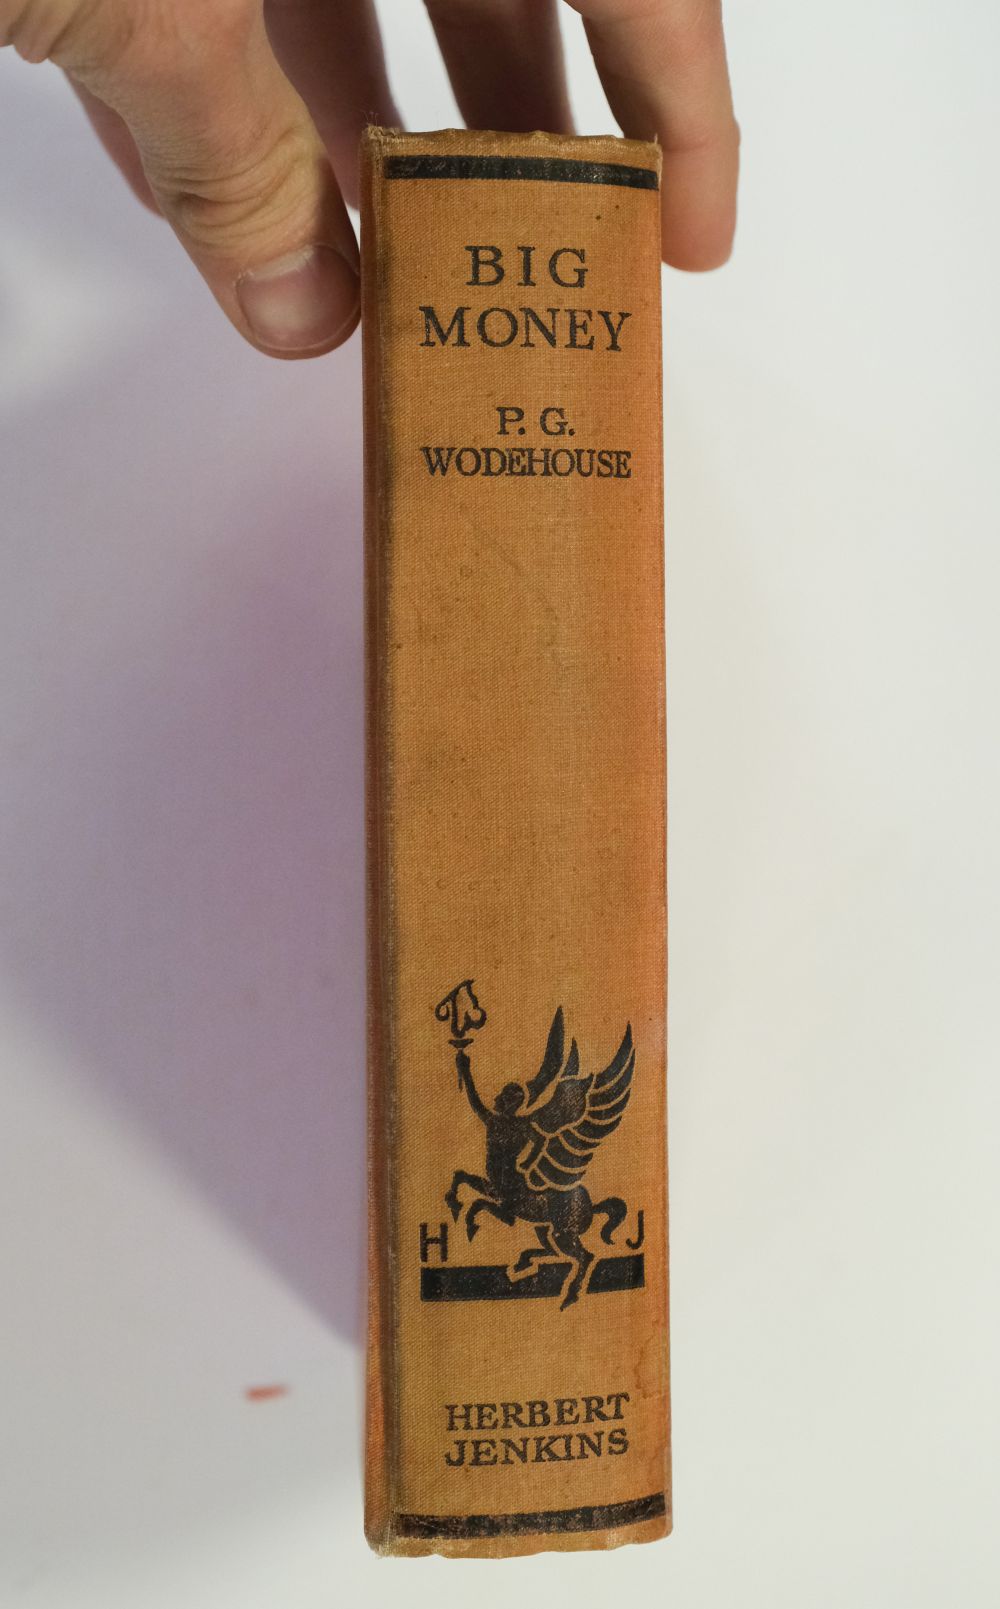 Wodehouse (P.G.) Big Money, 1st edition, 1931 - Image 5 of 15